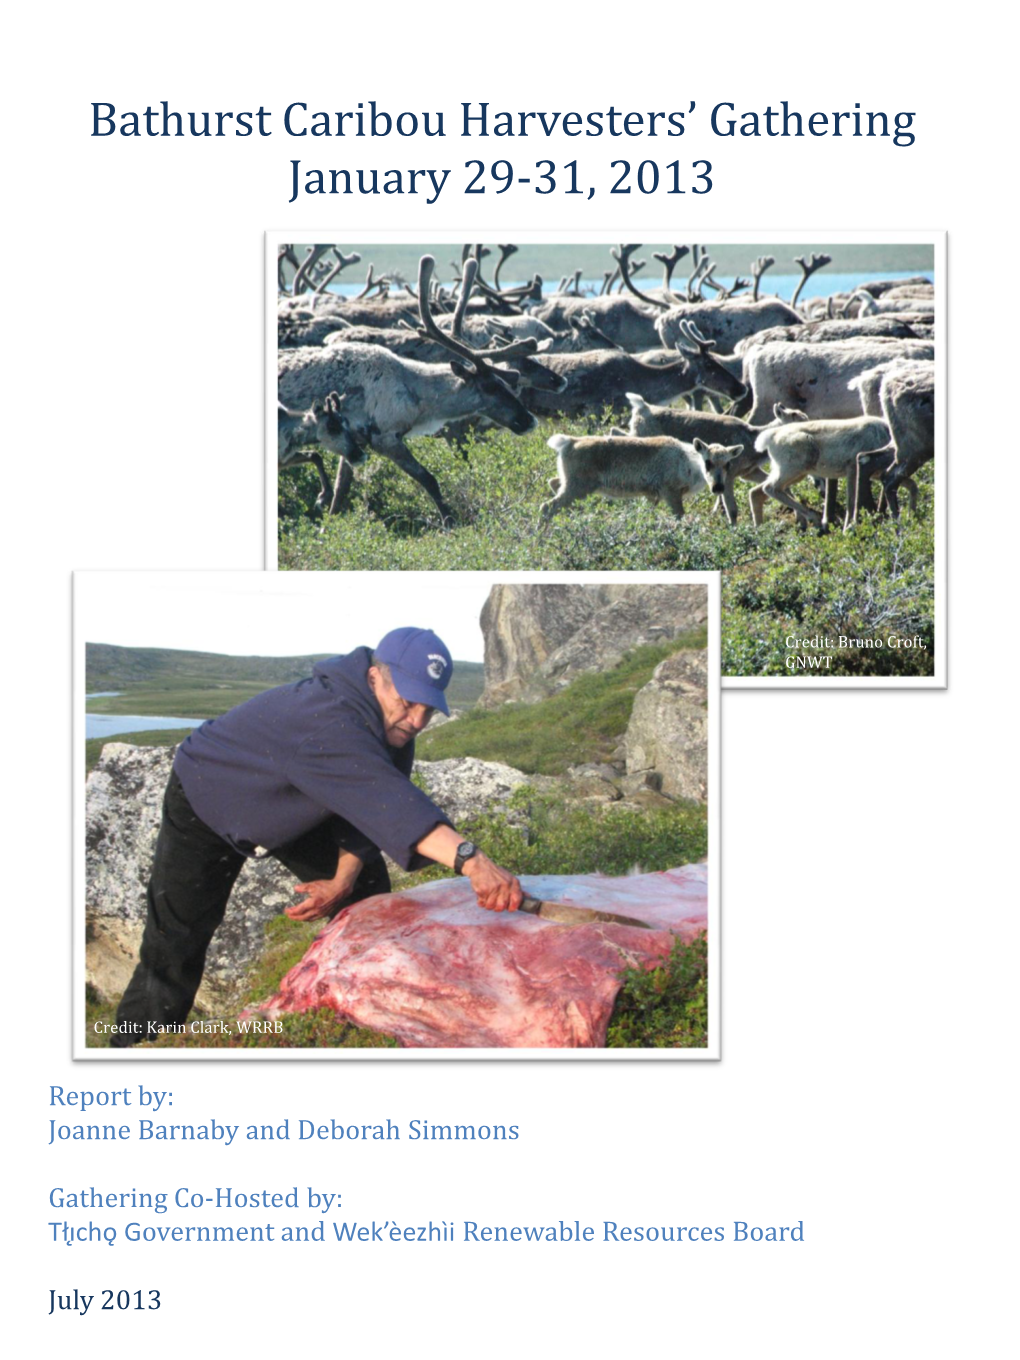 Bathurst Caribou Harvesters' Regional Gathering Report